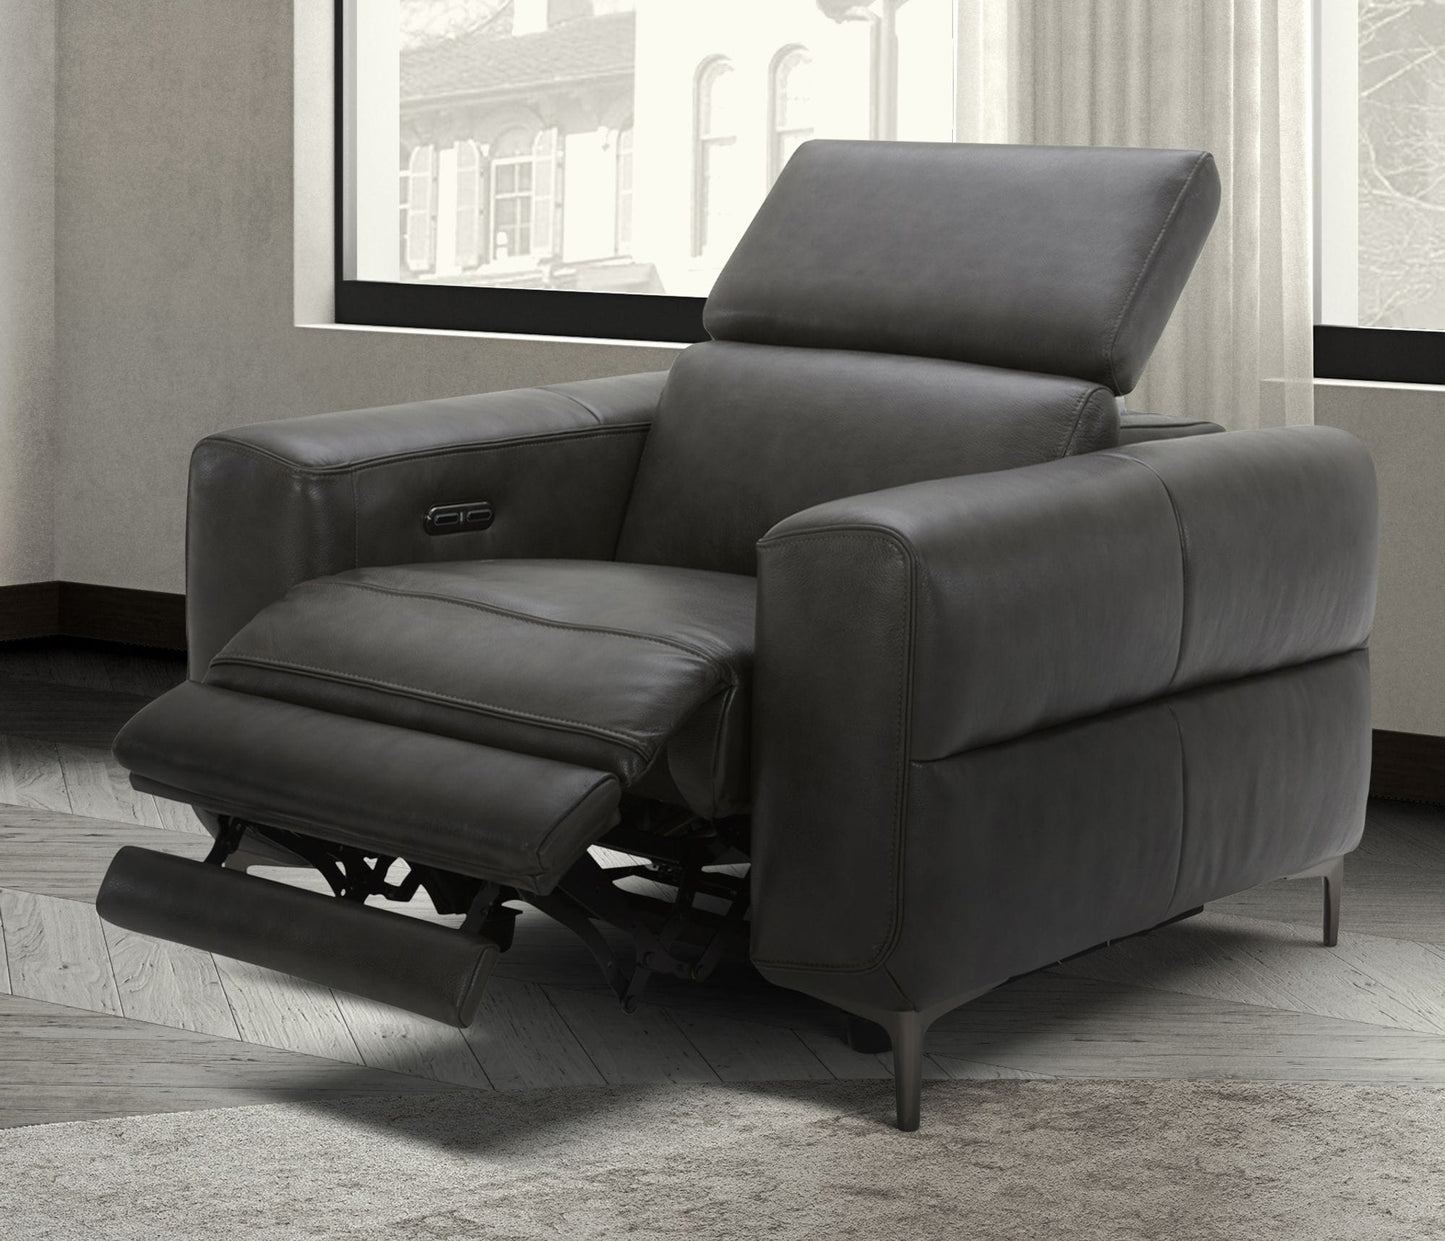 VIG Furniture Divani Casa Meadow Dk Grey Leather Electric Recliner Chair Electric Headrest